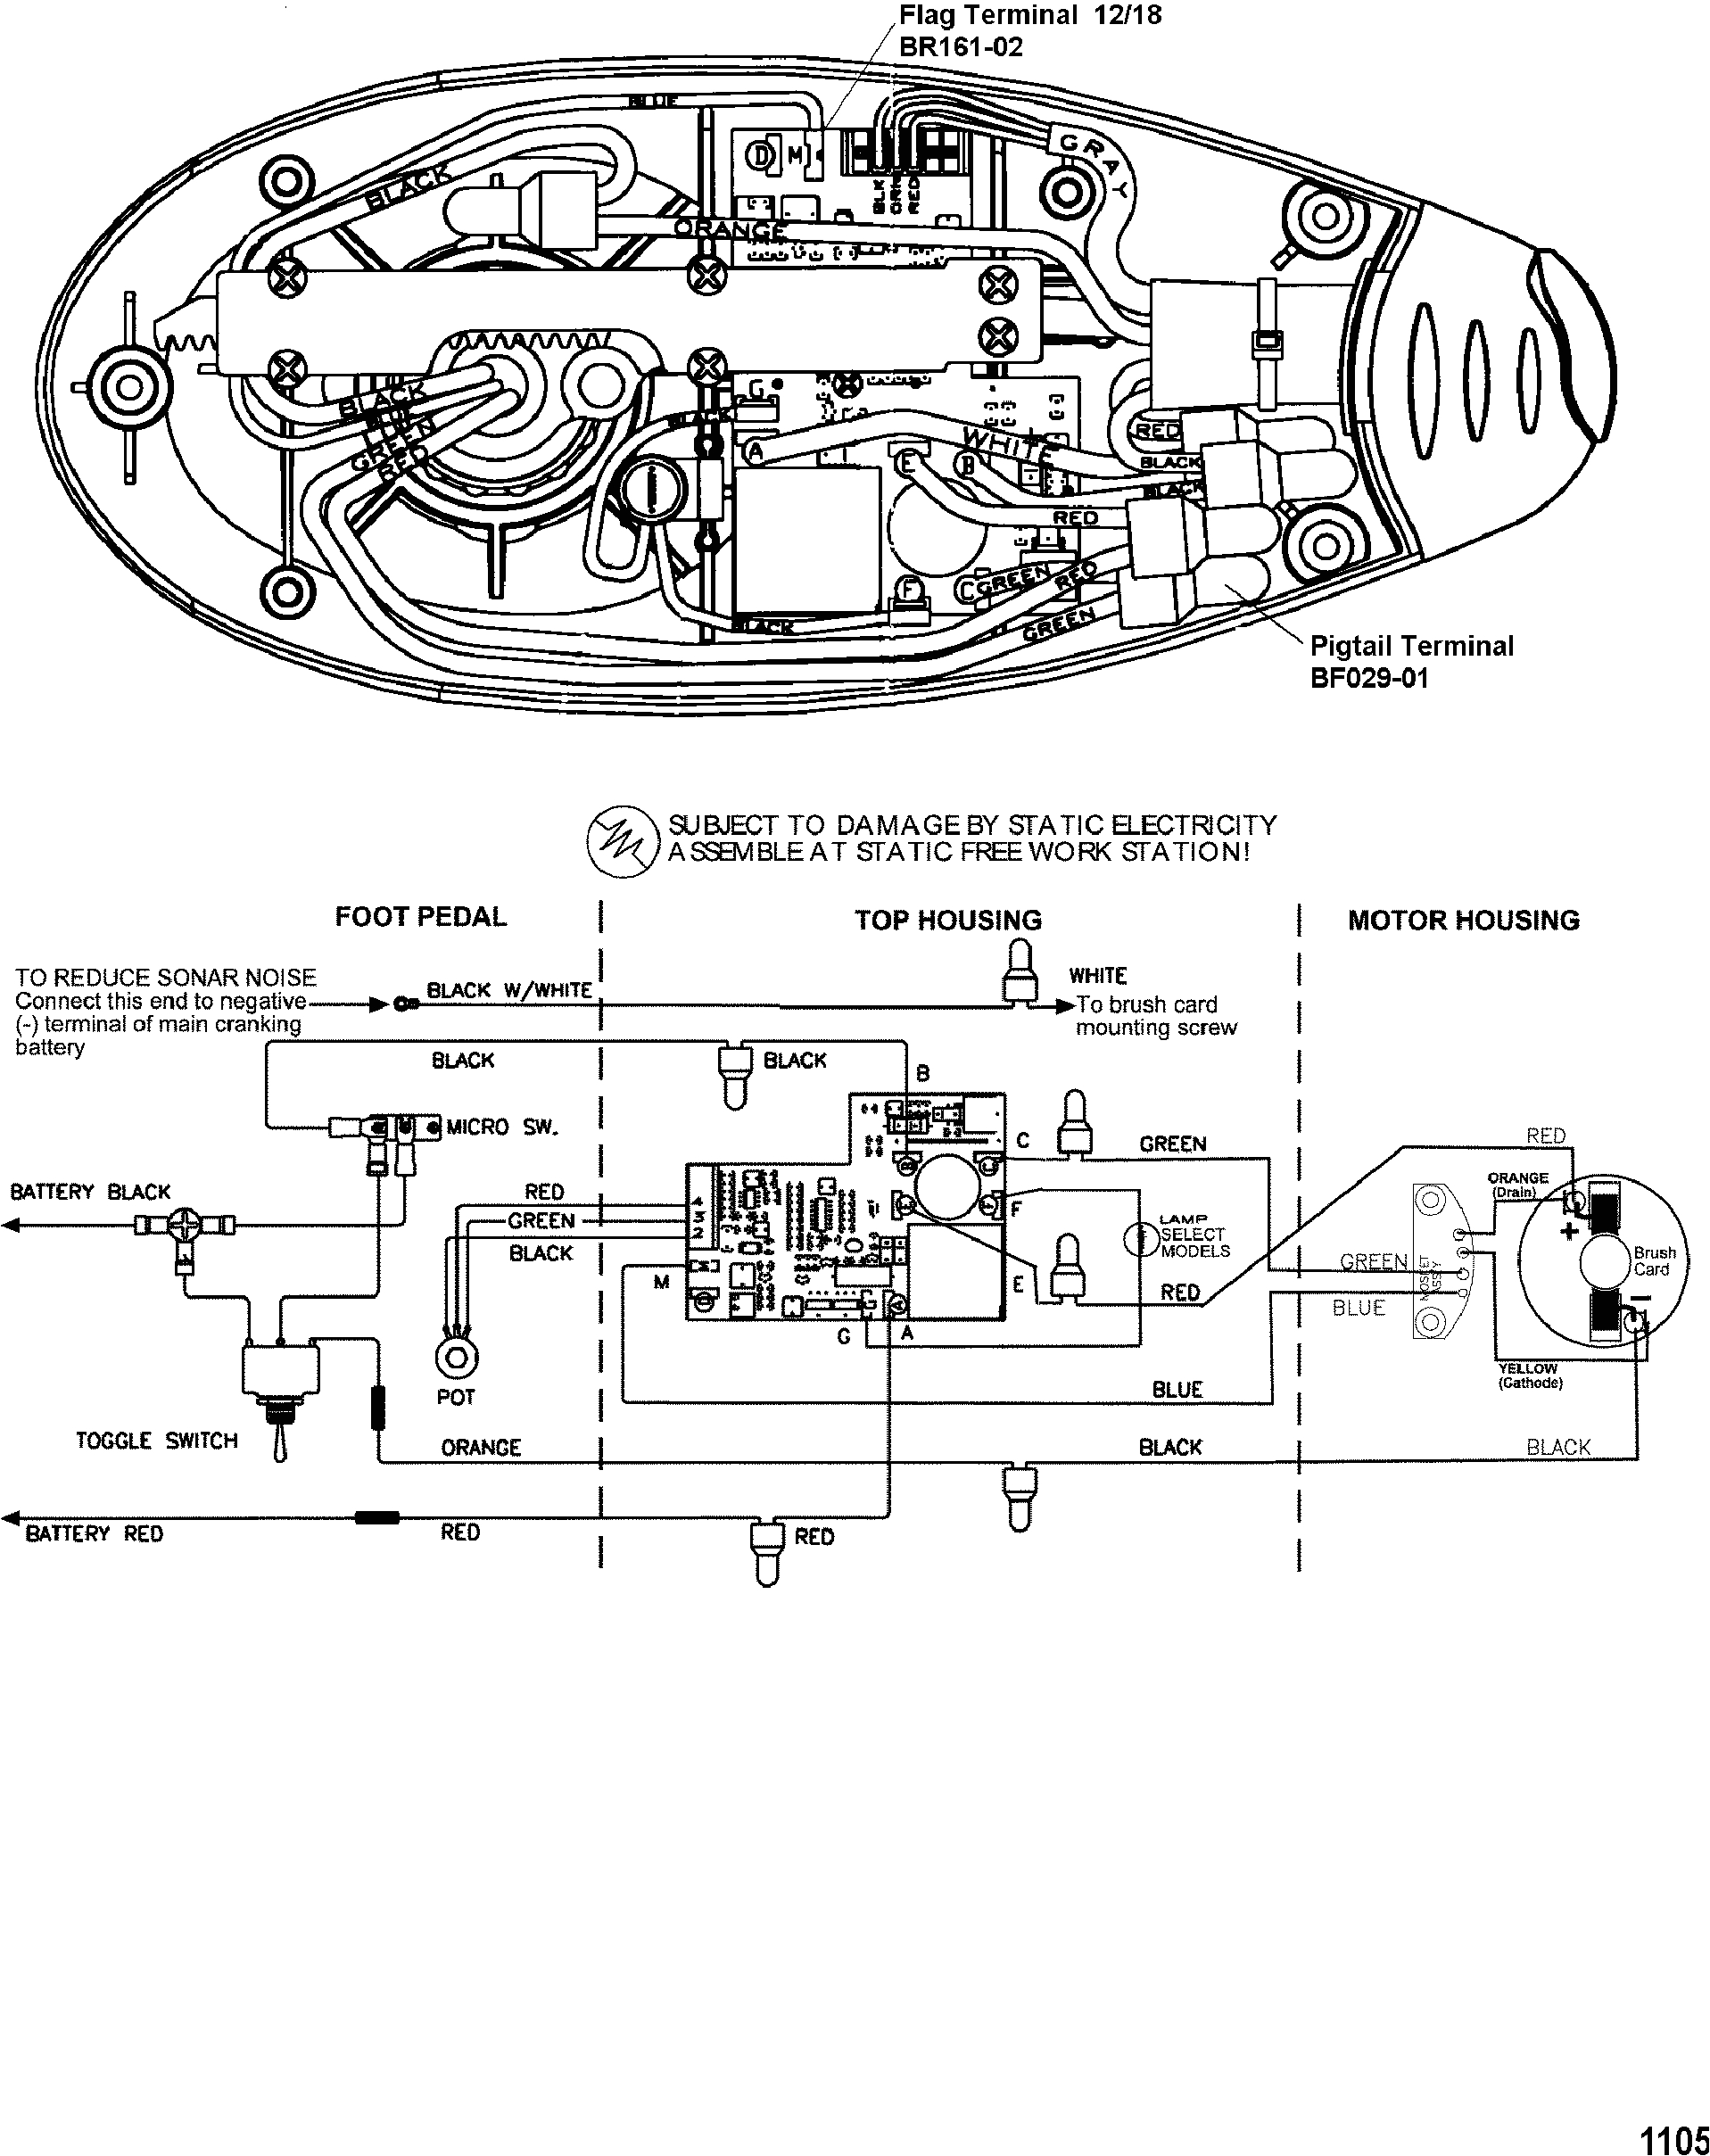 motorguide varimax wiring diagram